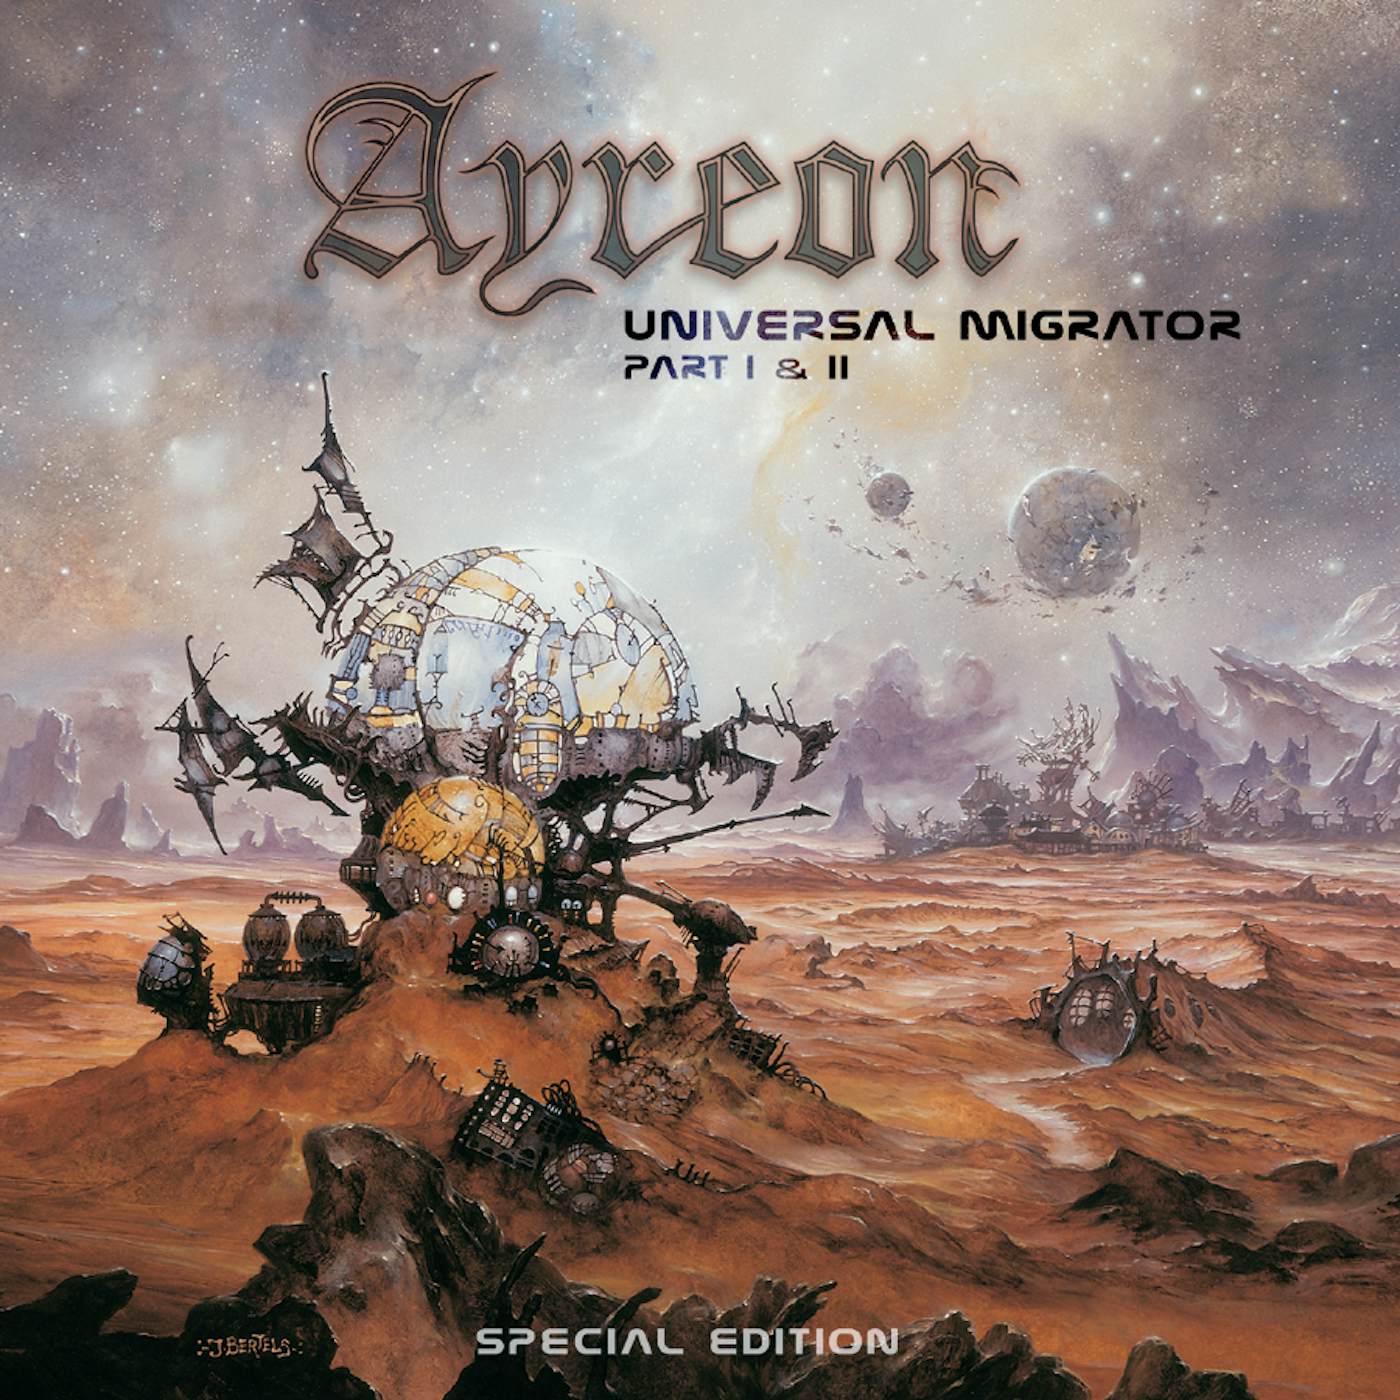 Ayreon UNIVERSAL MIGRATOR PT.1 & 2 CD